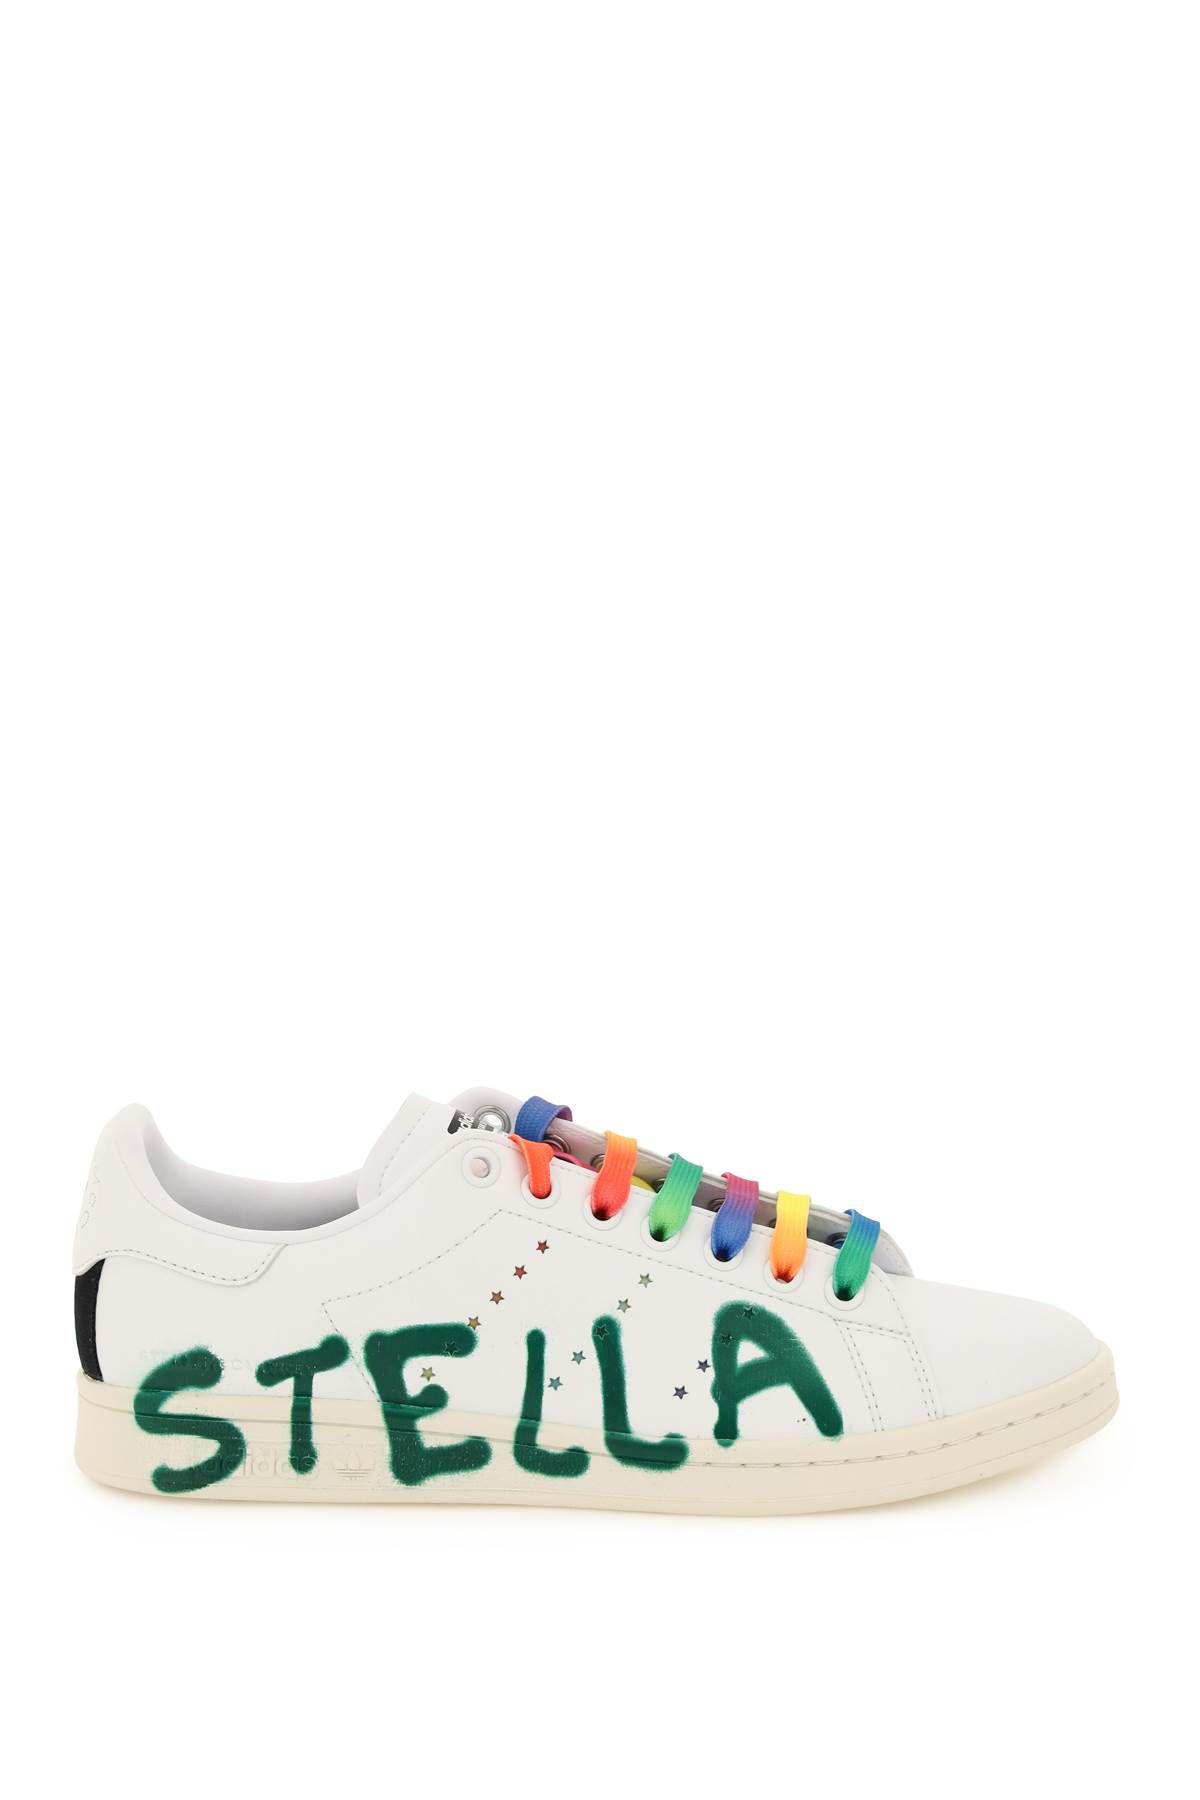 Stella McCartney Stella mccartney stan smith stella sneakers with graffiti logo Size US 6 / IT 36 - 1 Preview